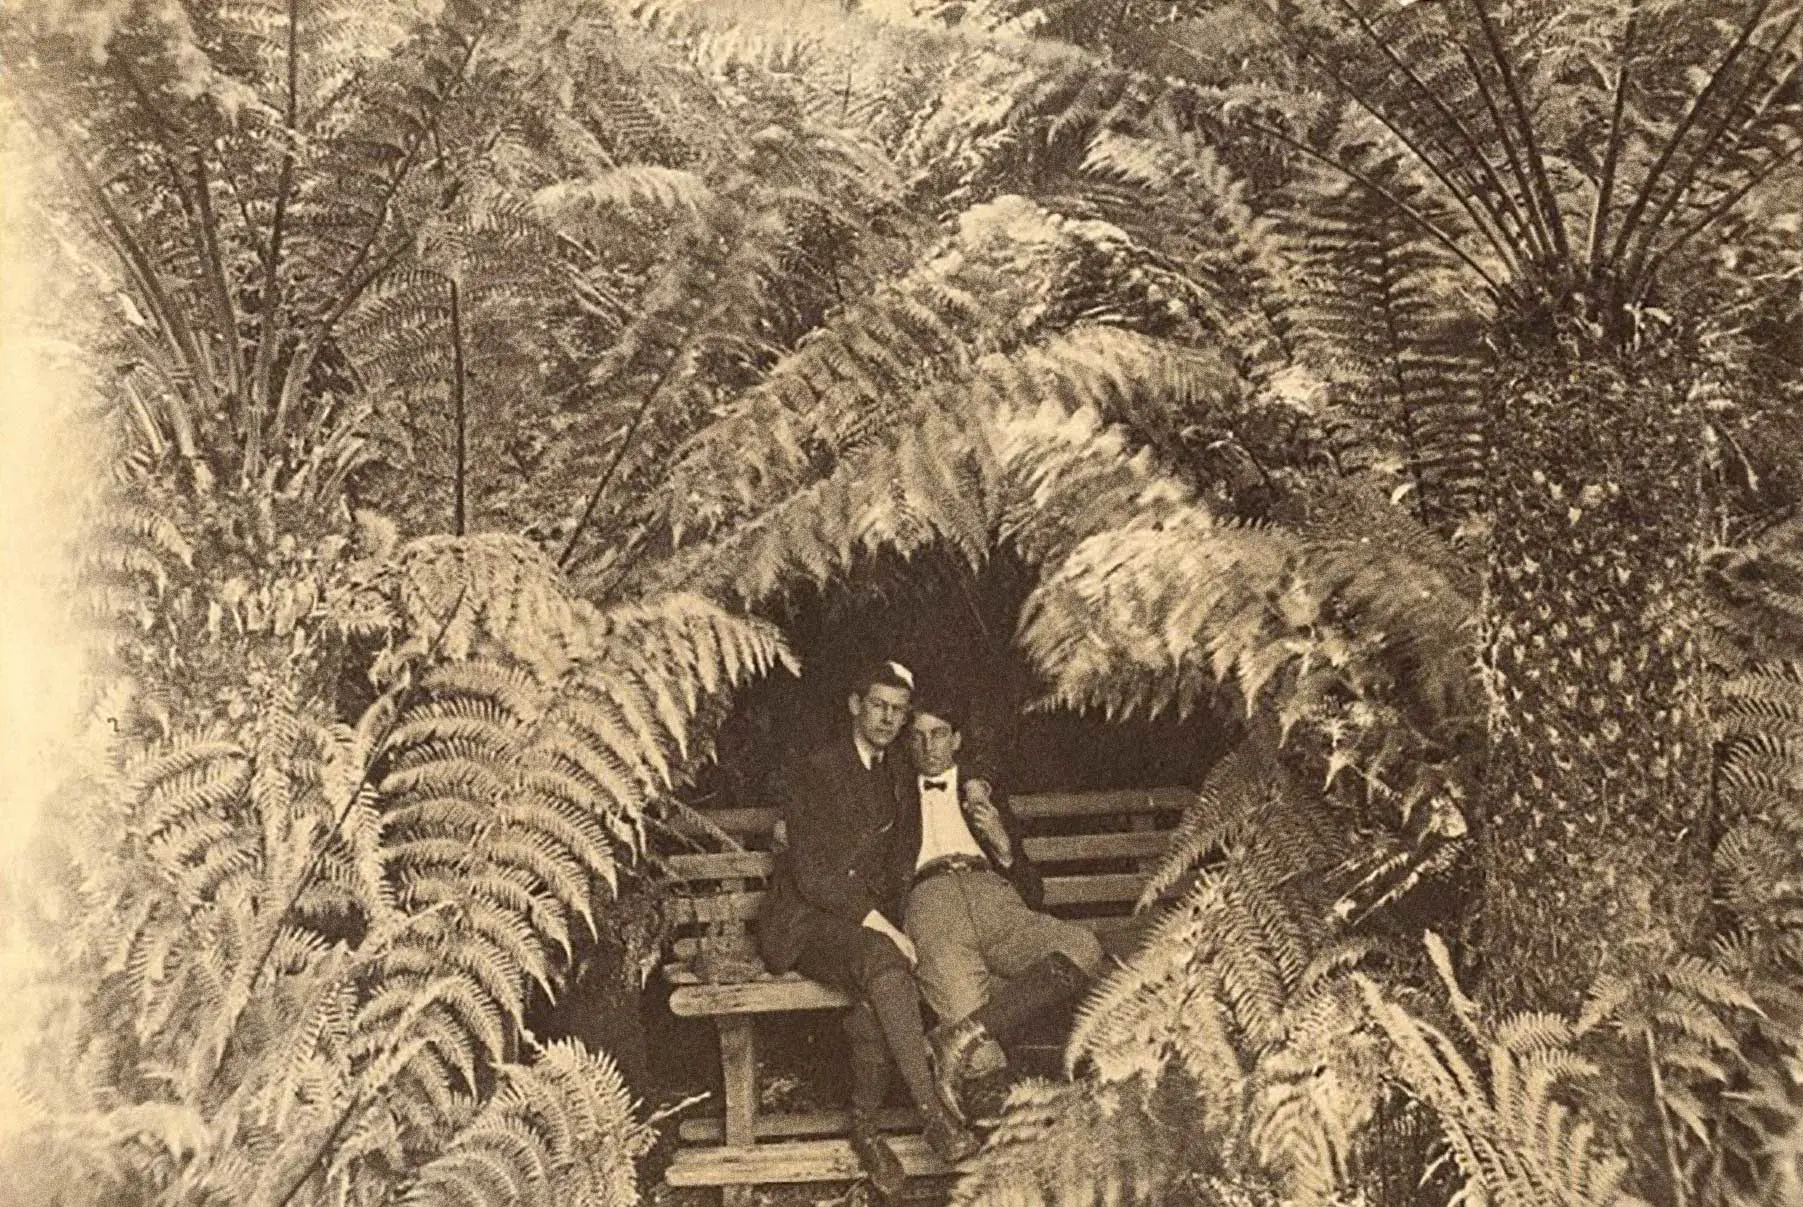 Two men at Fern Tree circa 1890